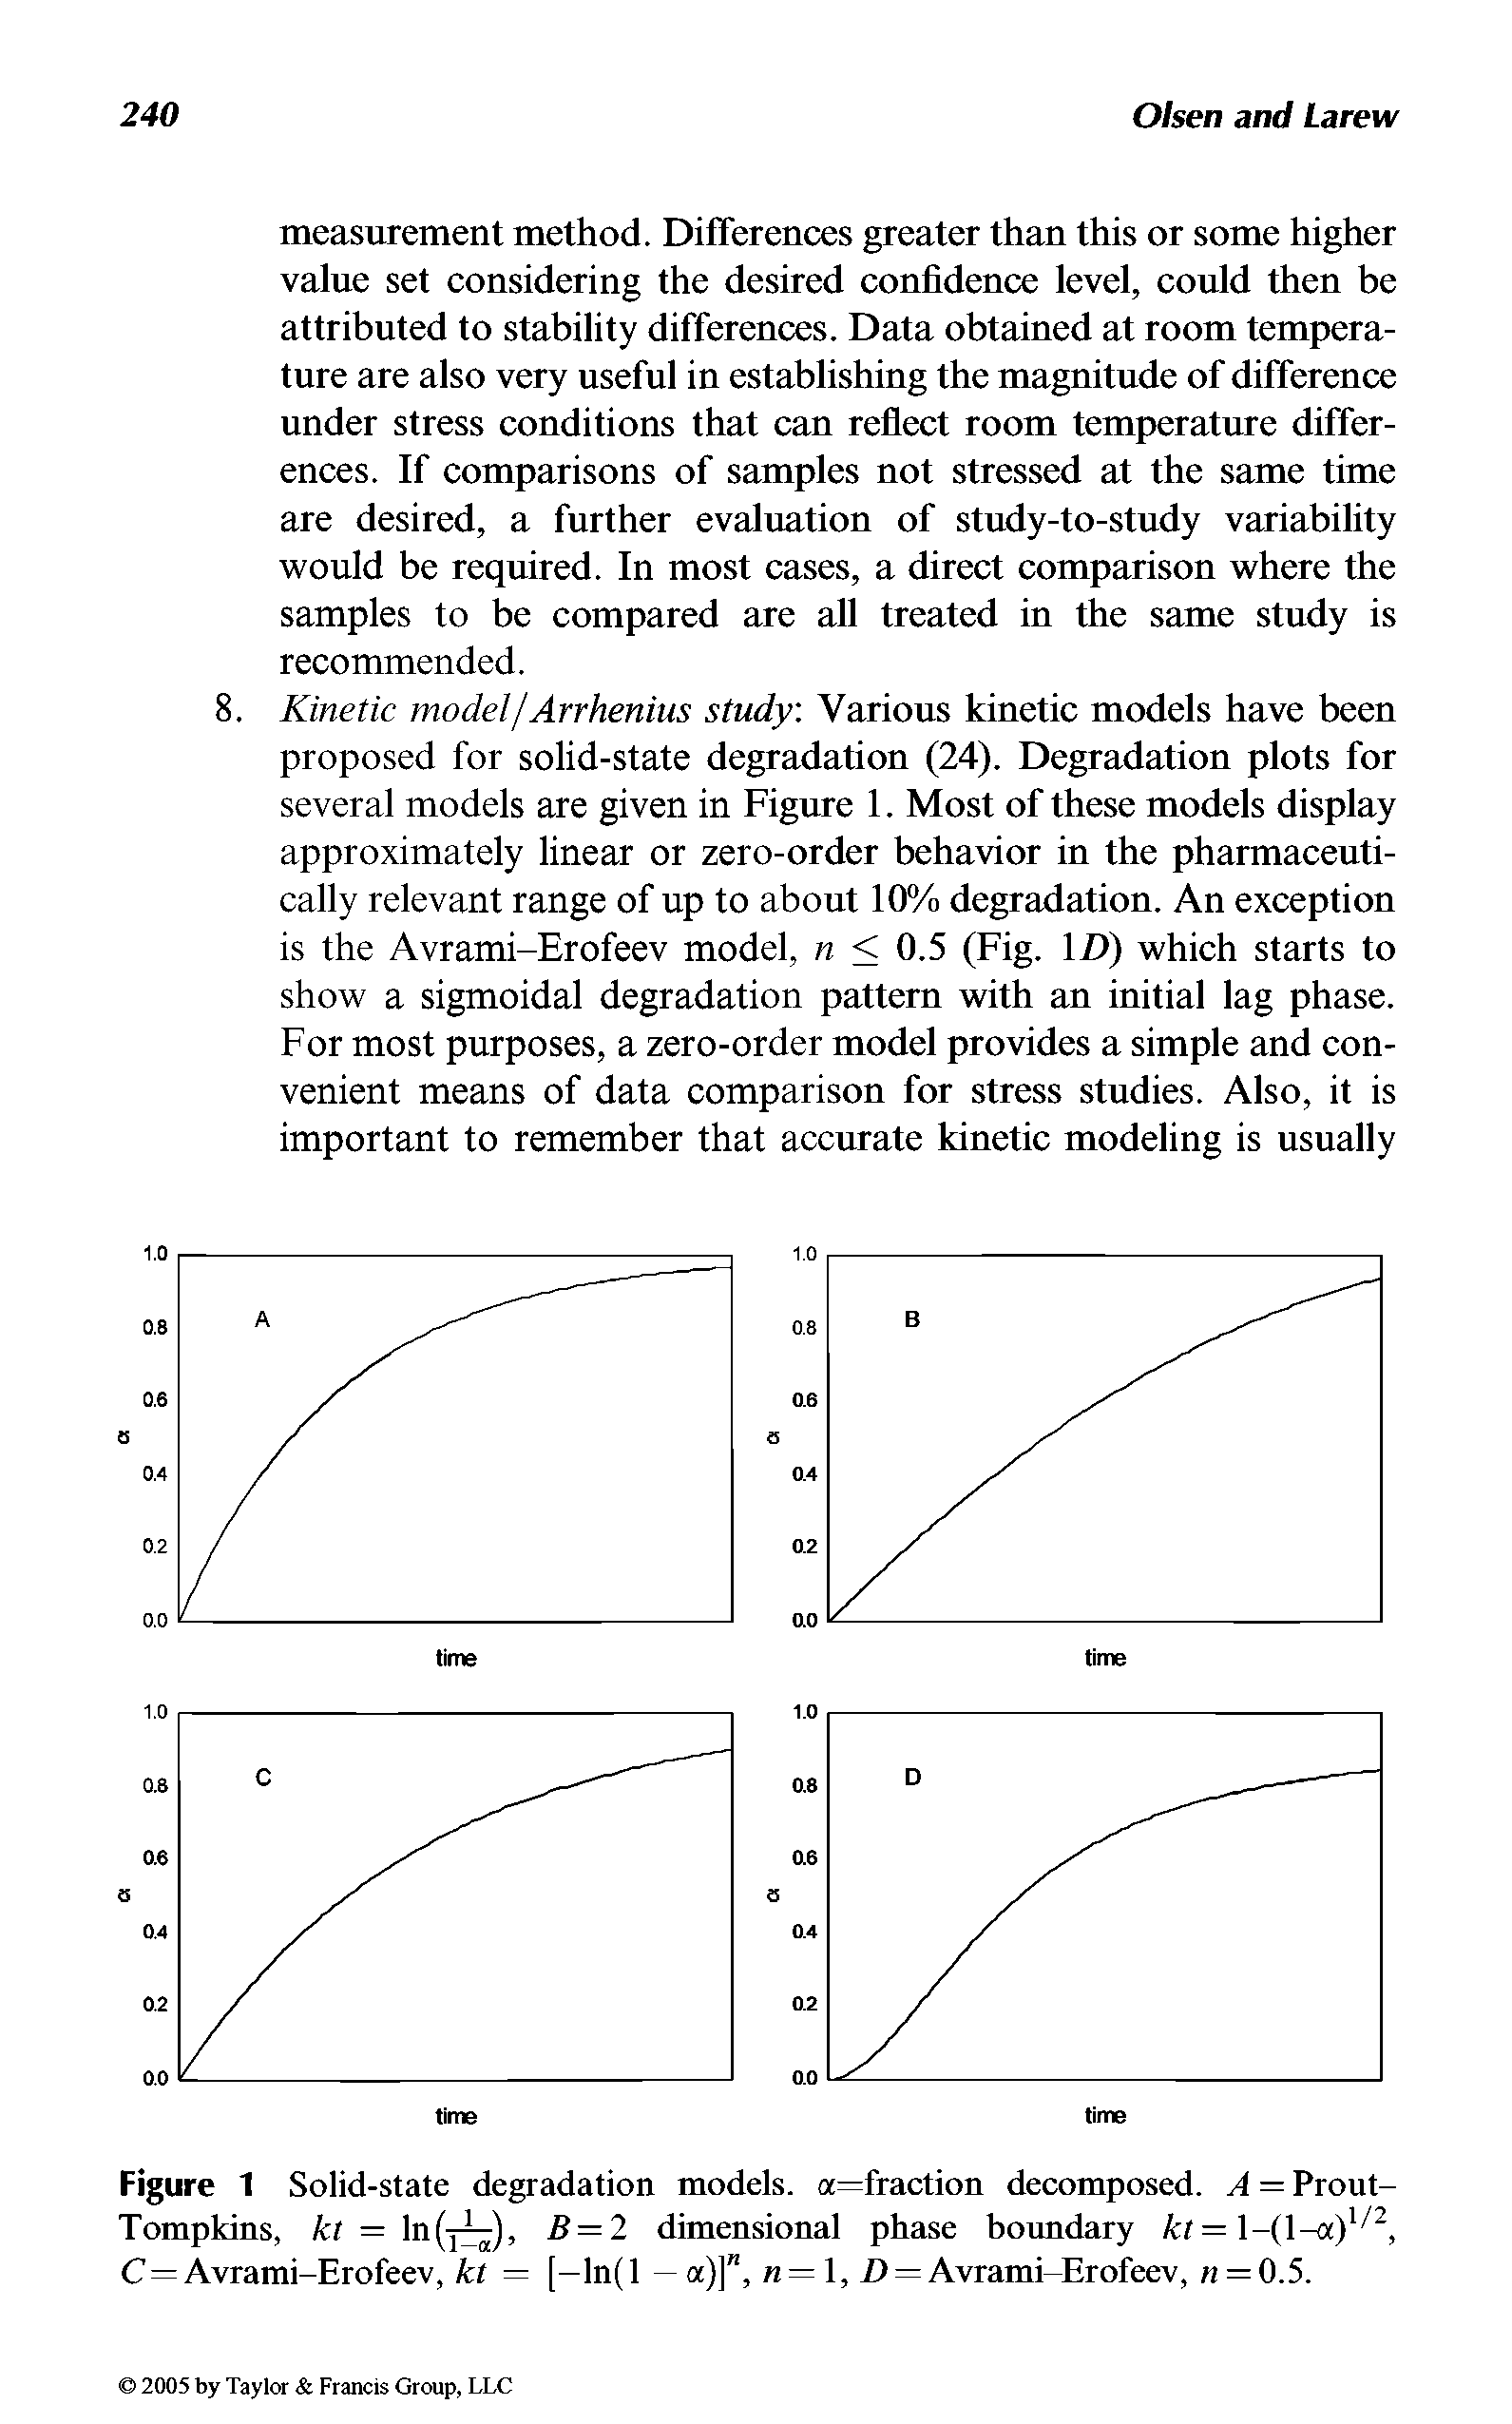 Figure 1 Solid-state degradation models, a—fraction decomposed. A = Prout-Tompkins, kt = ln(-p ), B = 2 dimensional phase boundary kl = l-(l-a)1 2, C=Avrami-Erofeev, kt — [—ln(l — a)] , w=l, D = Avrami-Erofeev, = 0.5.